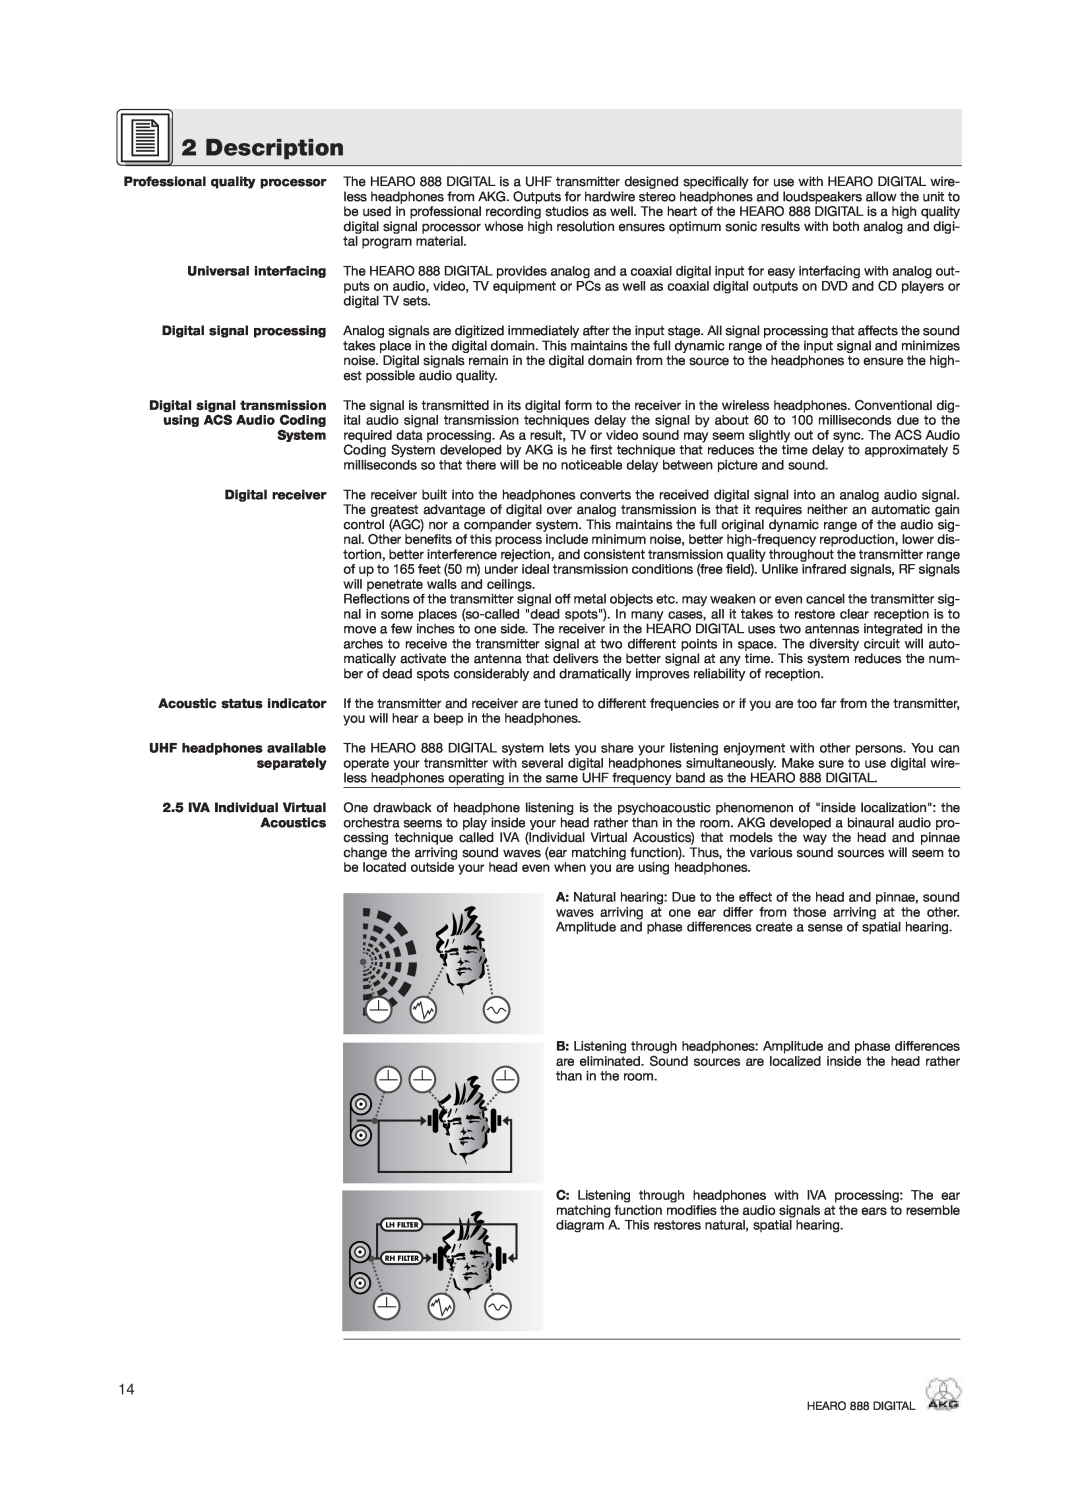 AKG Acoustics HEARO 888 specifications Description, diagram A. This restores natural, spatial hearing, Lh Filter, Rh Filter 